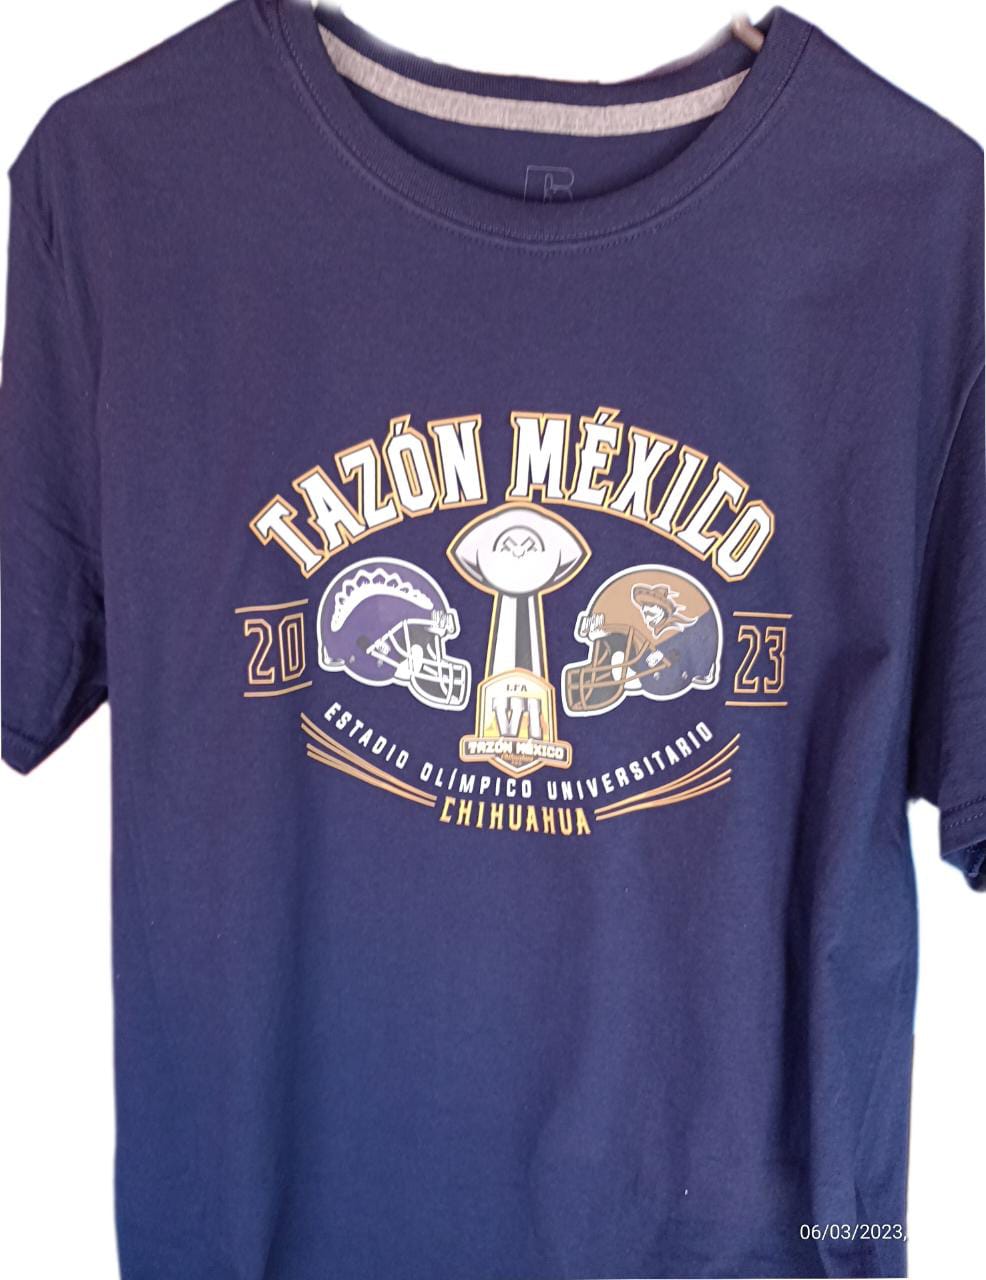 commemorative t-shirt tazon mexico Vl